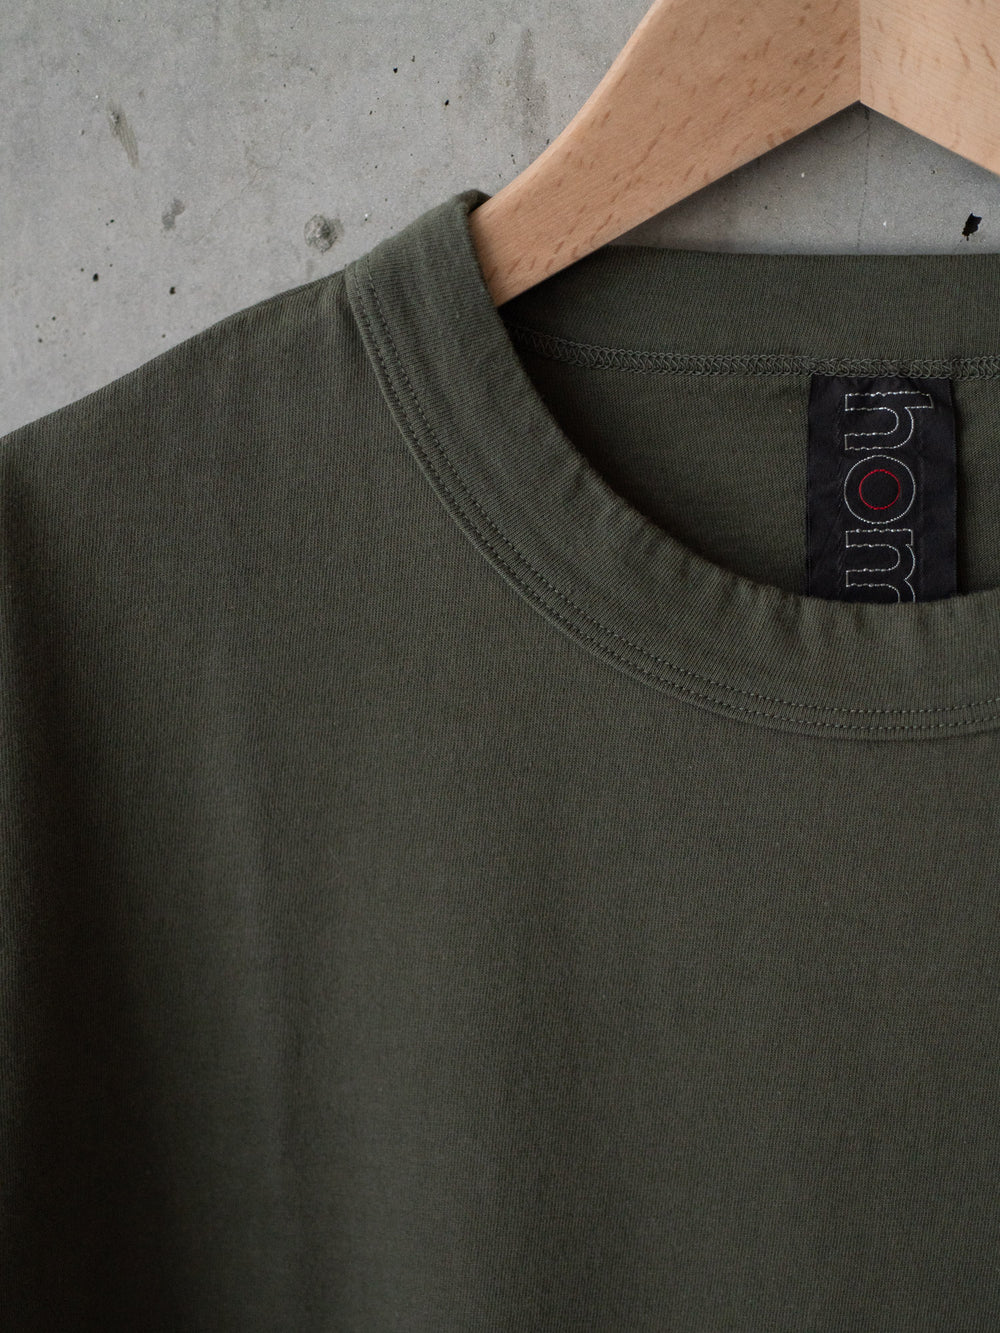 Short Sleeve T-Shirt – Khaki Green